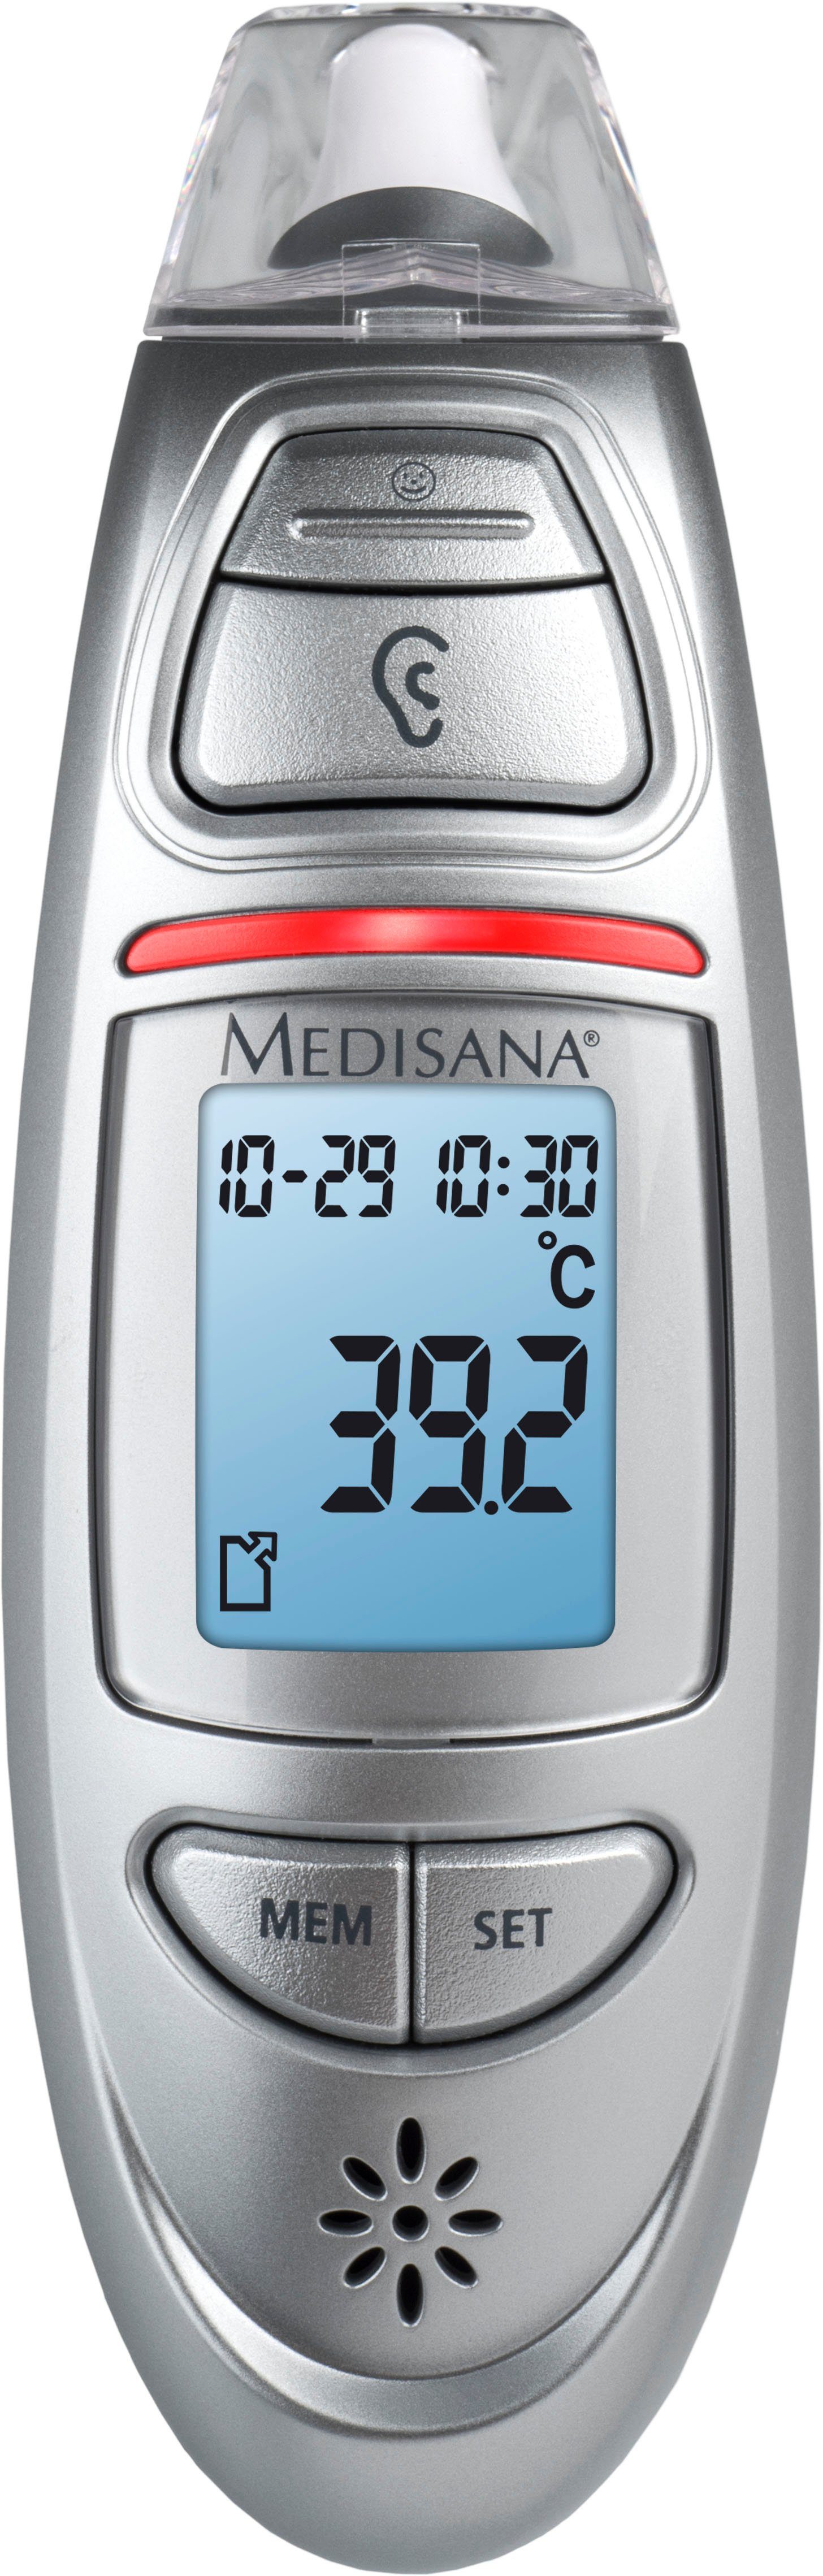 Connect 750 Medisana Fieberthermometer TM